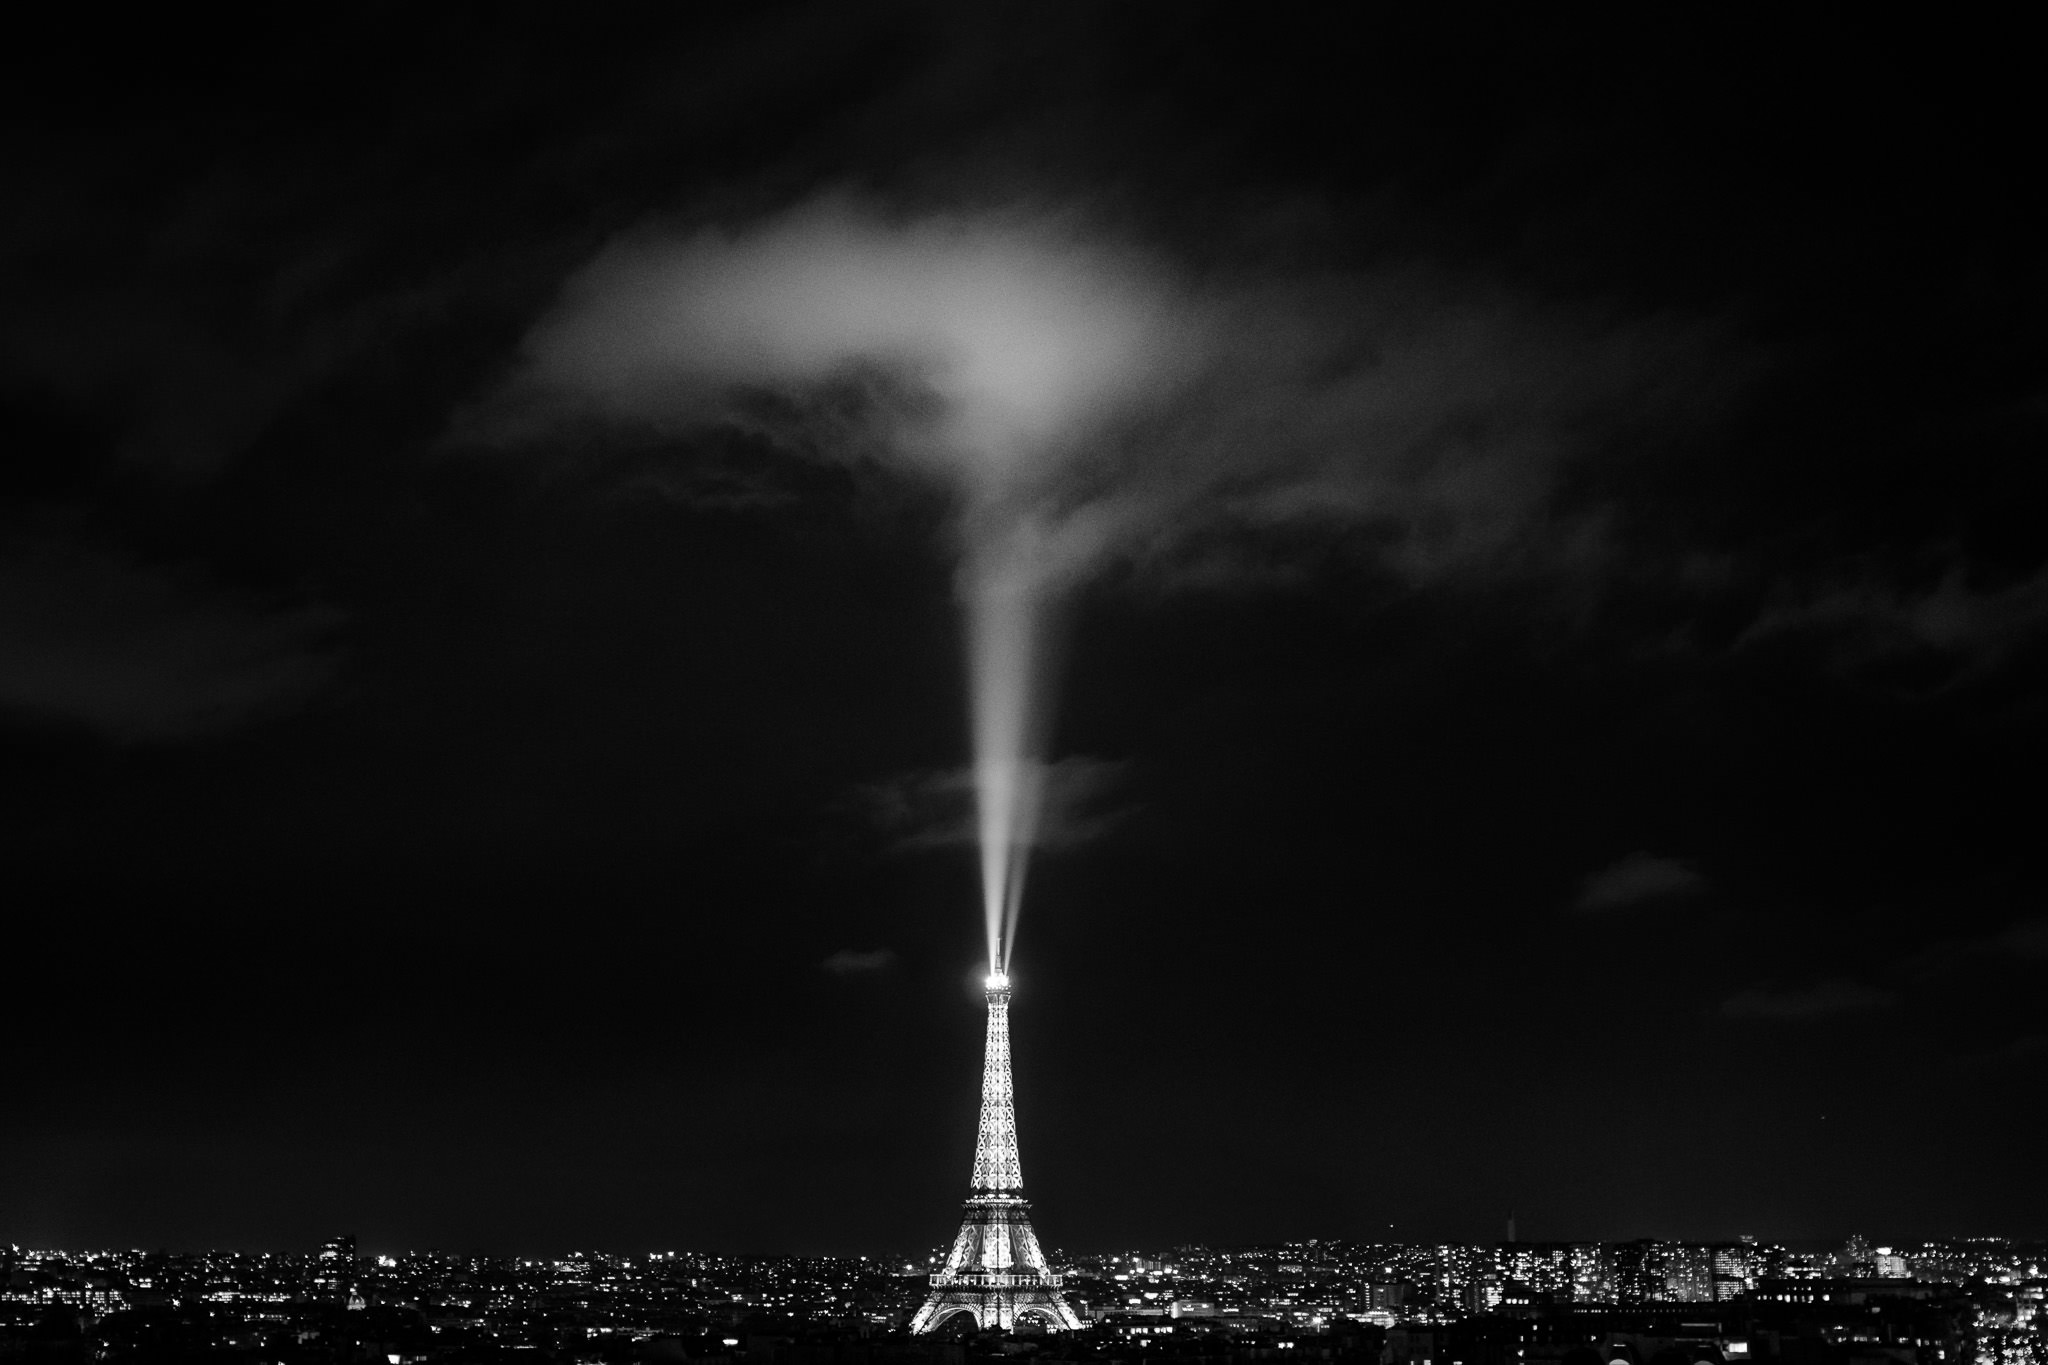 photographylife.com/wp-content/uploads/2015/03/9-Eiffel-Tower.jpg